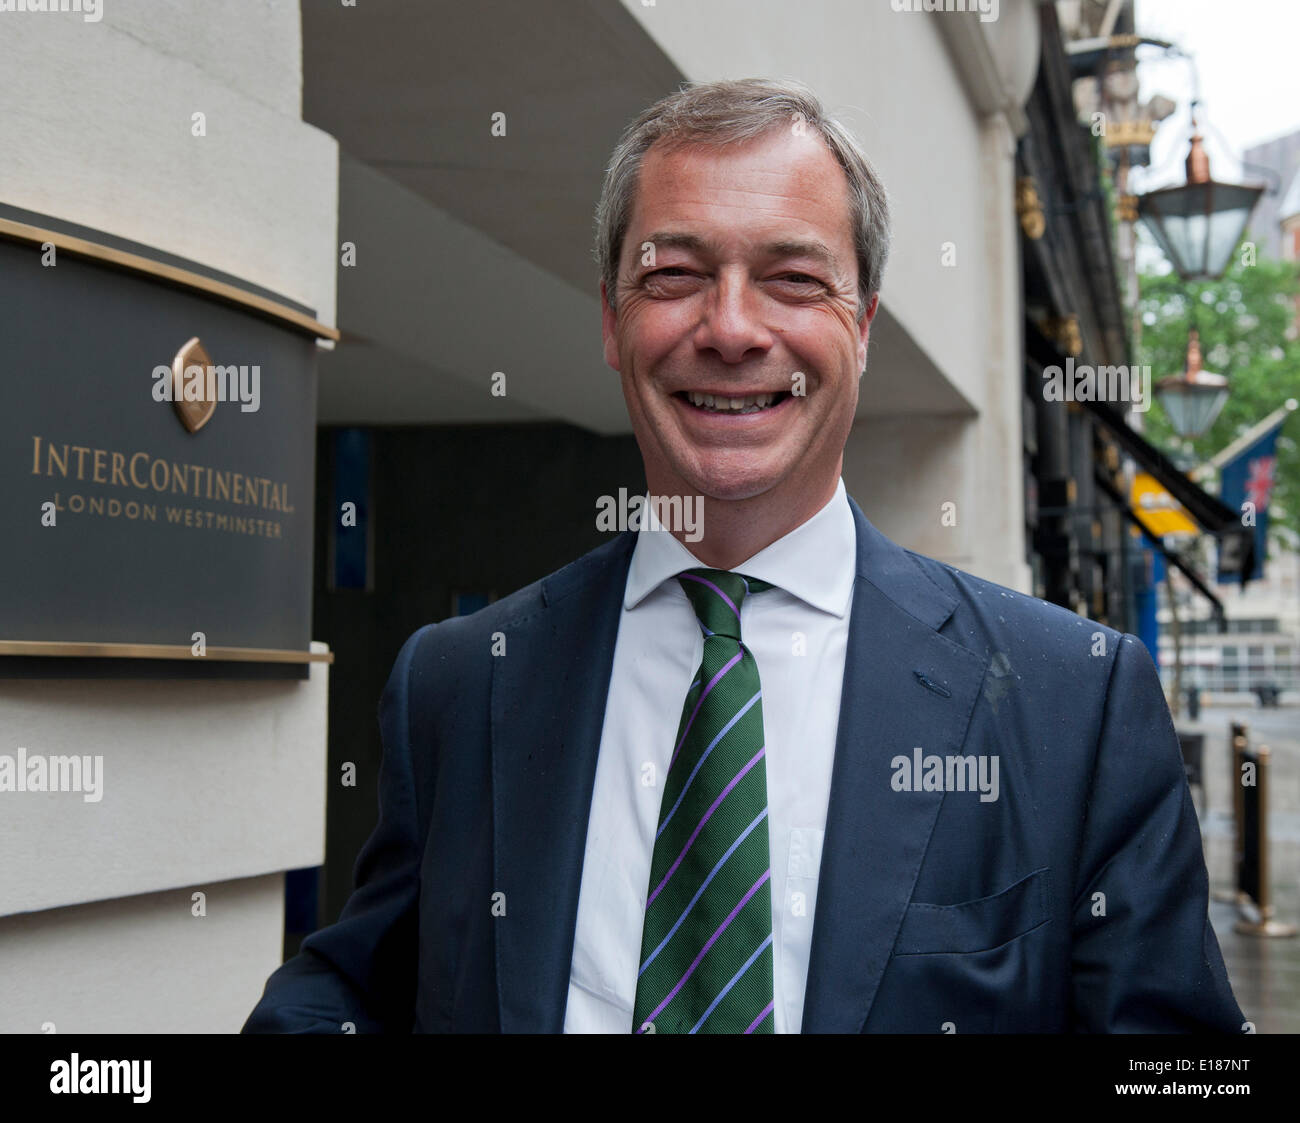 Nigel Farage Victory Pint Broadway Street London Uk mit UKIP Team MEP Wahl 2014 feiern Credit: Prixnews/Alamy Live News Stockfoto